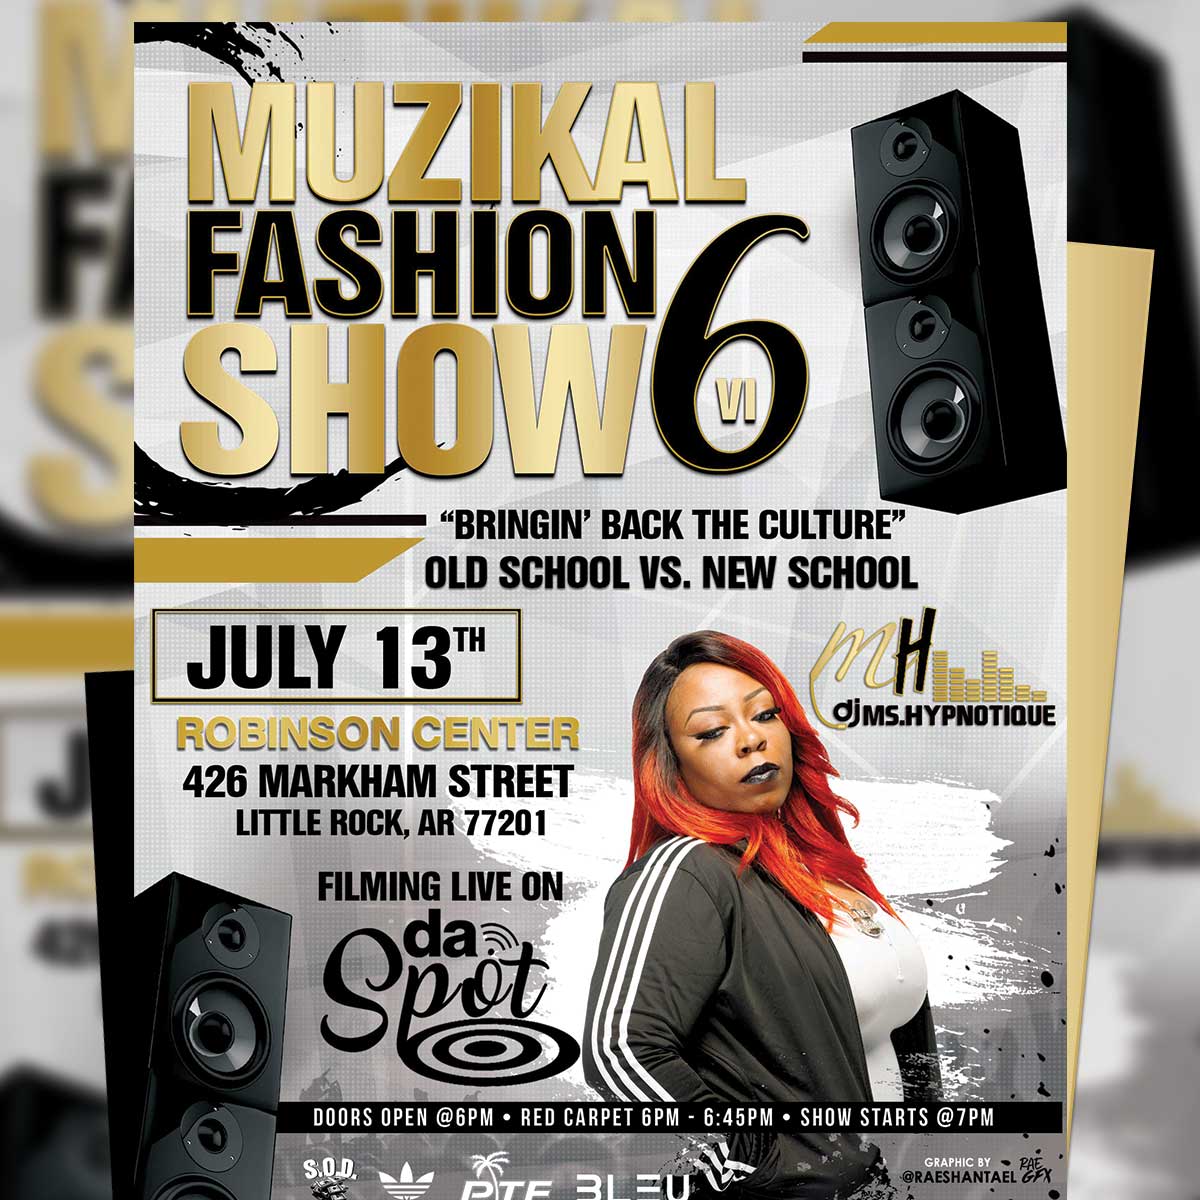 [Event] 7/13 Muzikal Fashion Show 6 in Little Rock